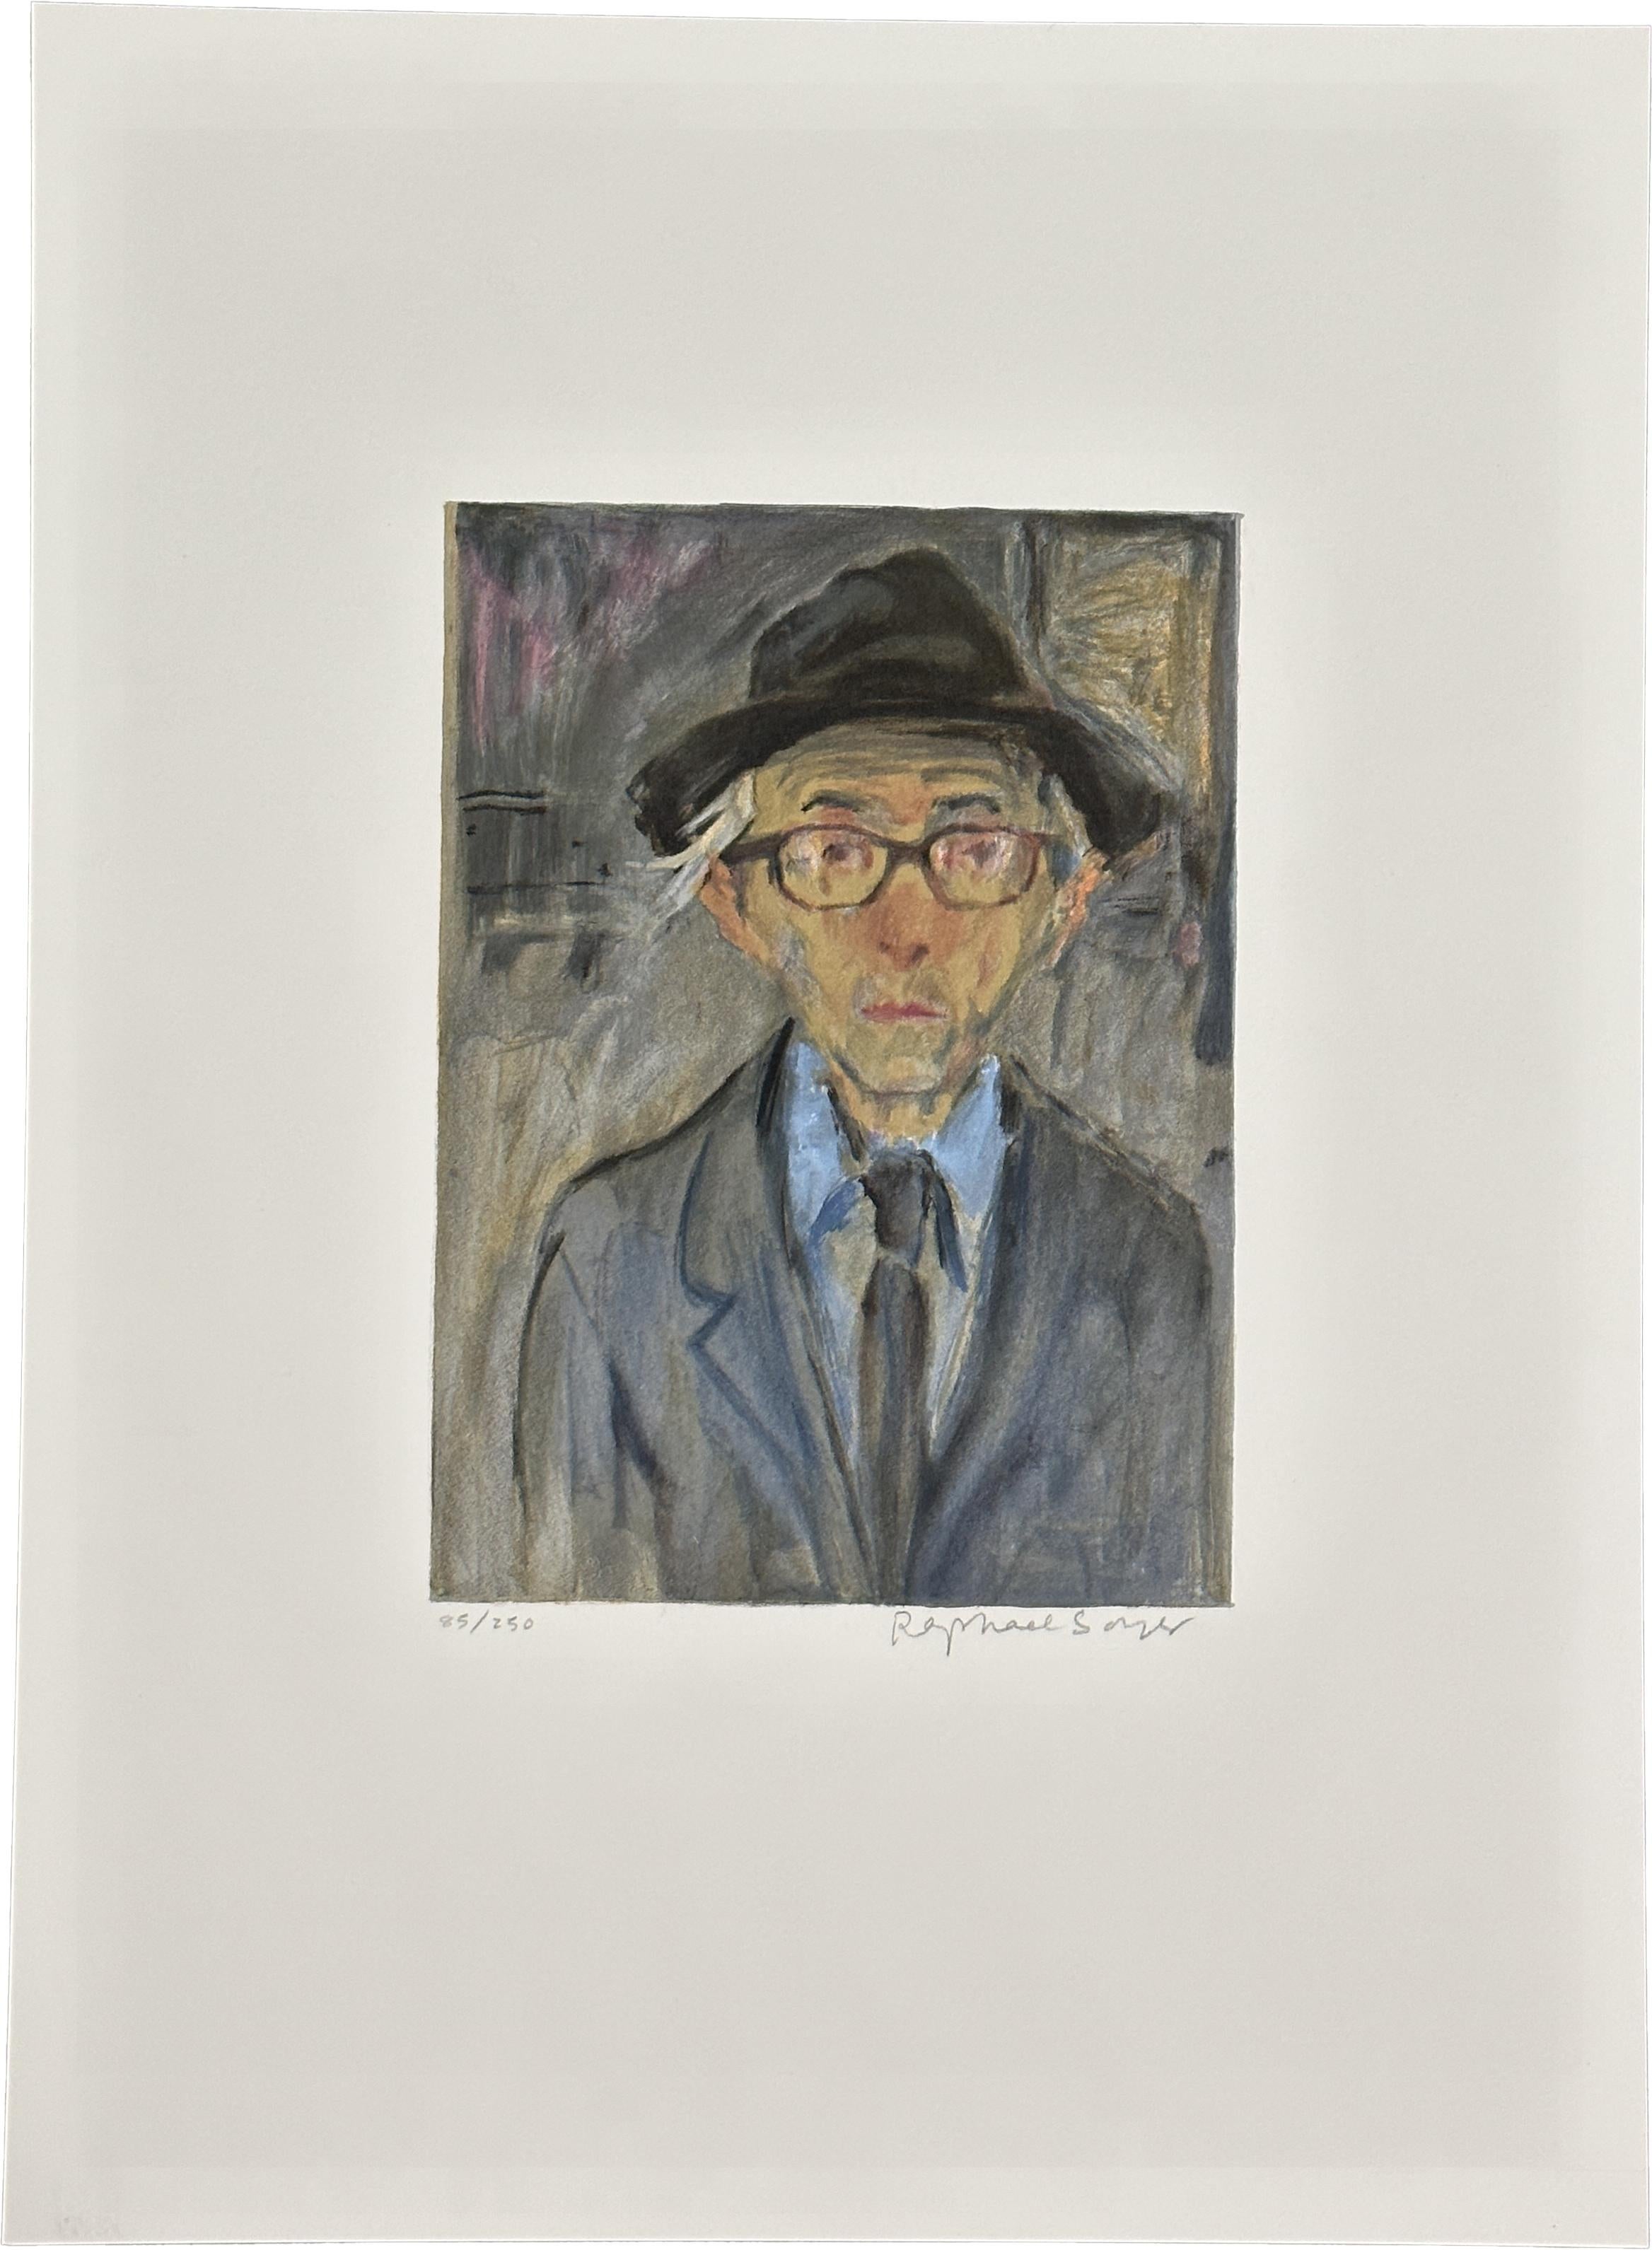 Raphael Soyer Portrait Print - Self Portrait 1979 Signed Limited Edition Lithograph